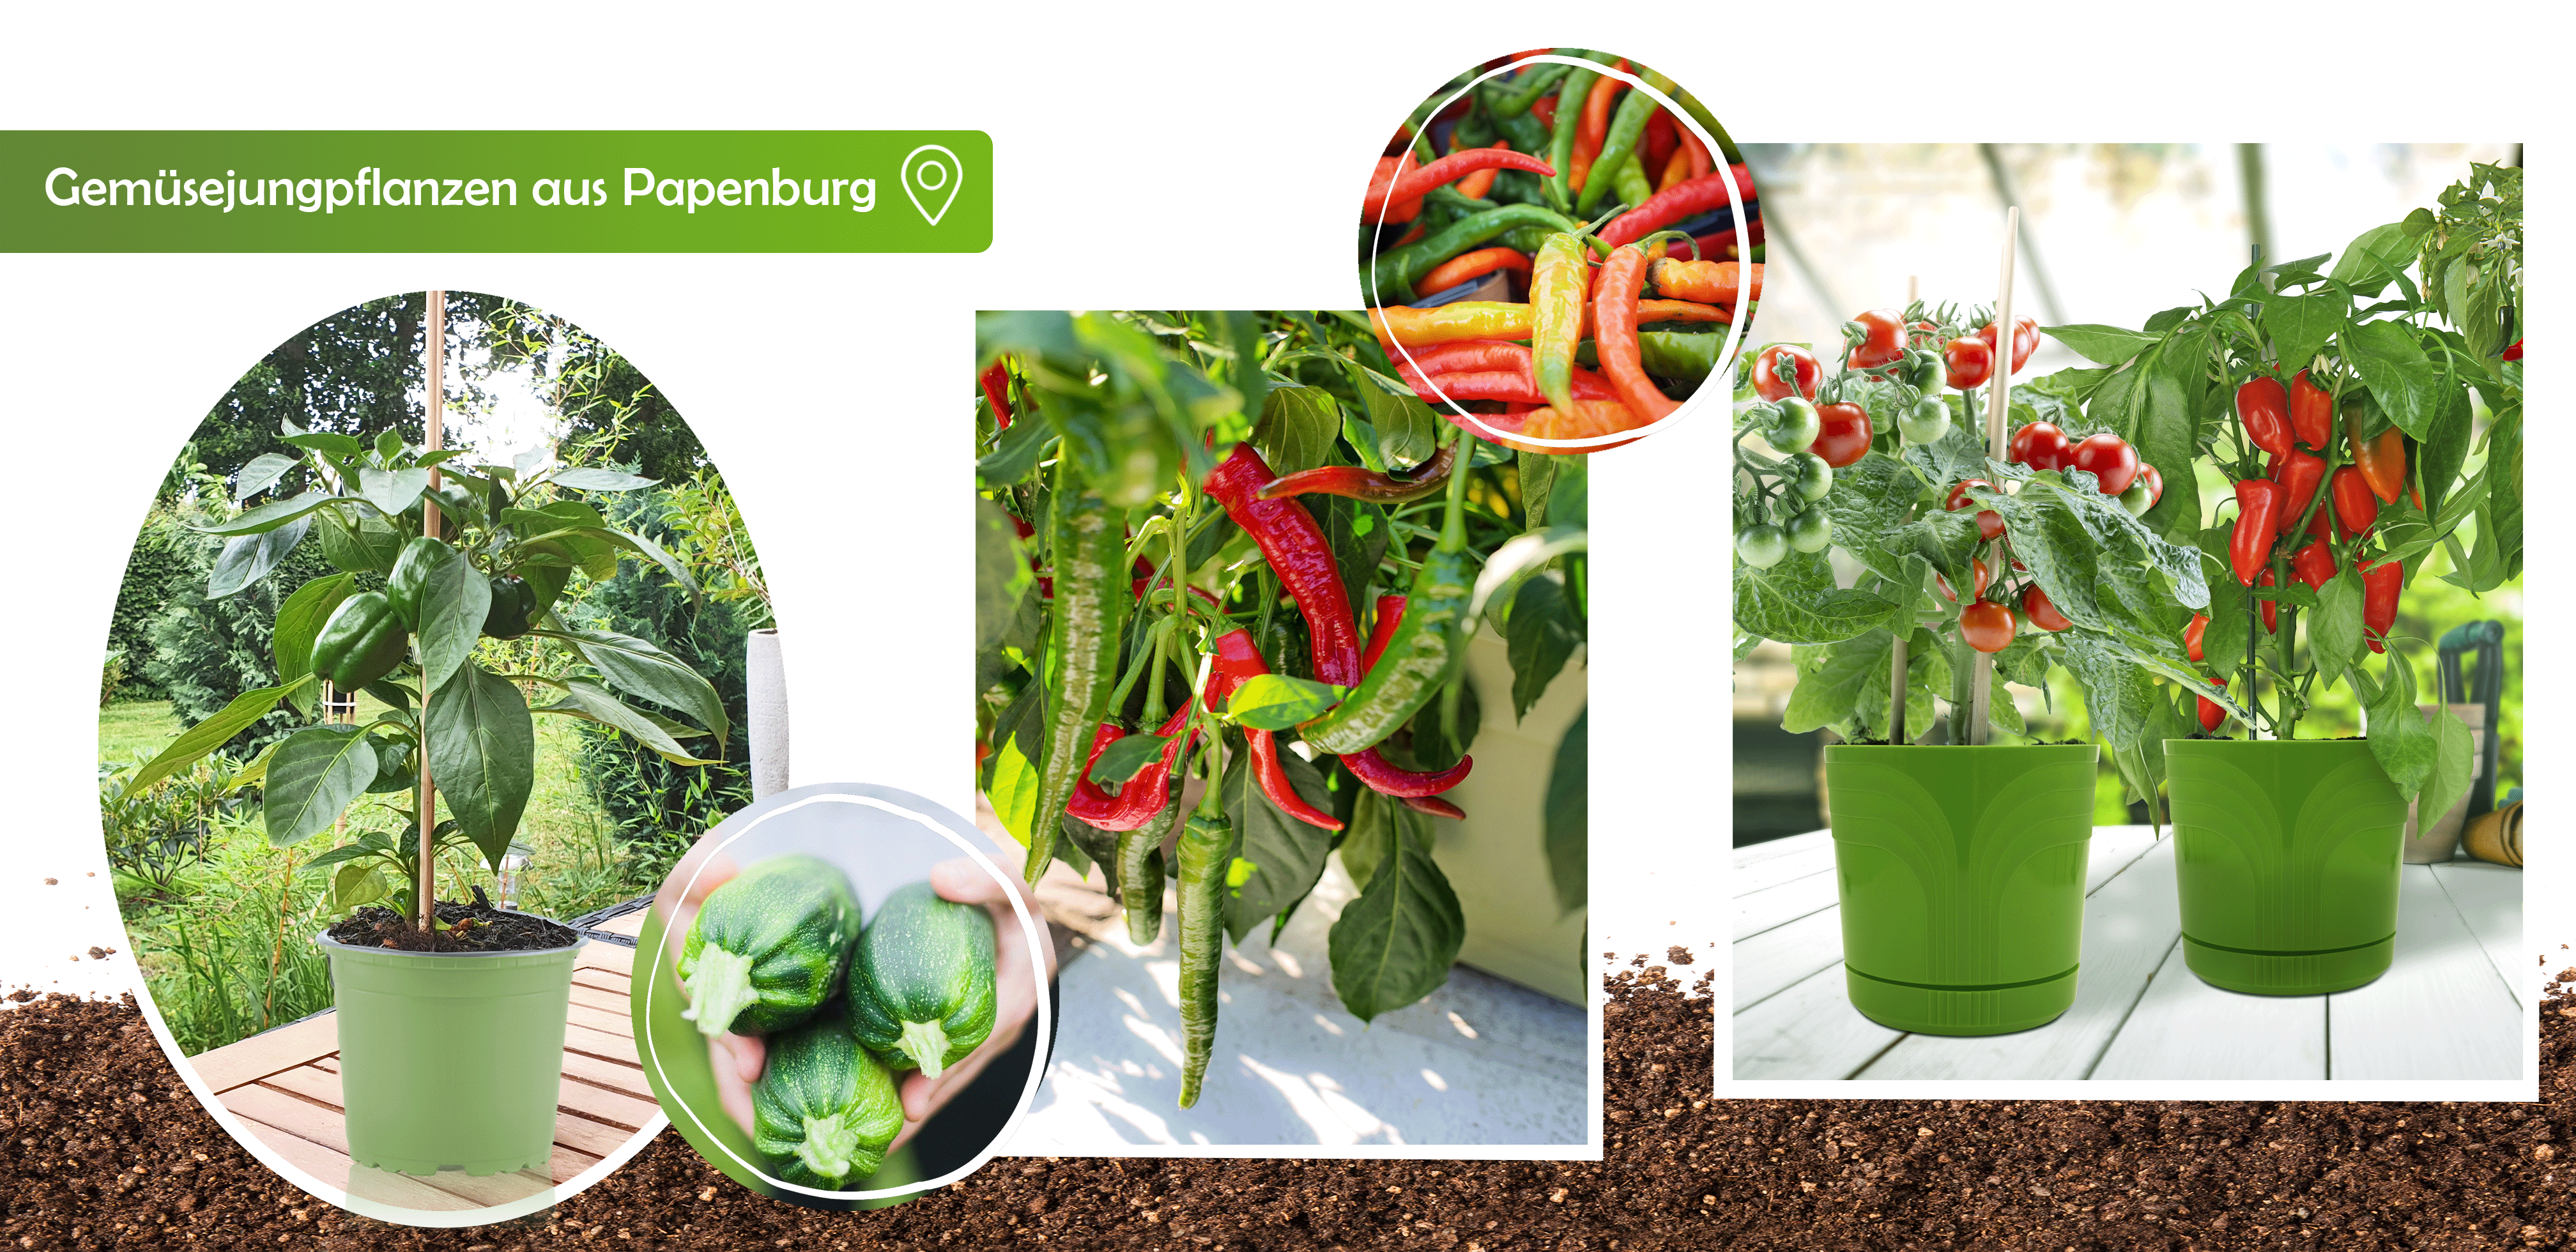 Gemüsepflanzen, Junggemüsepflanzen, Gemüsejungpflanzen, alte Gemüsesorten, Gemüsebau, Gemüsegärtner, Paprikaanbau, Gartenbauzentrale, GBZ, GBZ Papenburg, Papenburg